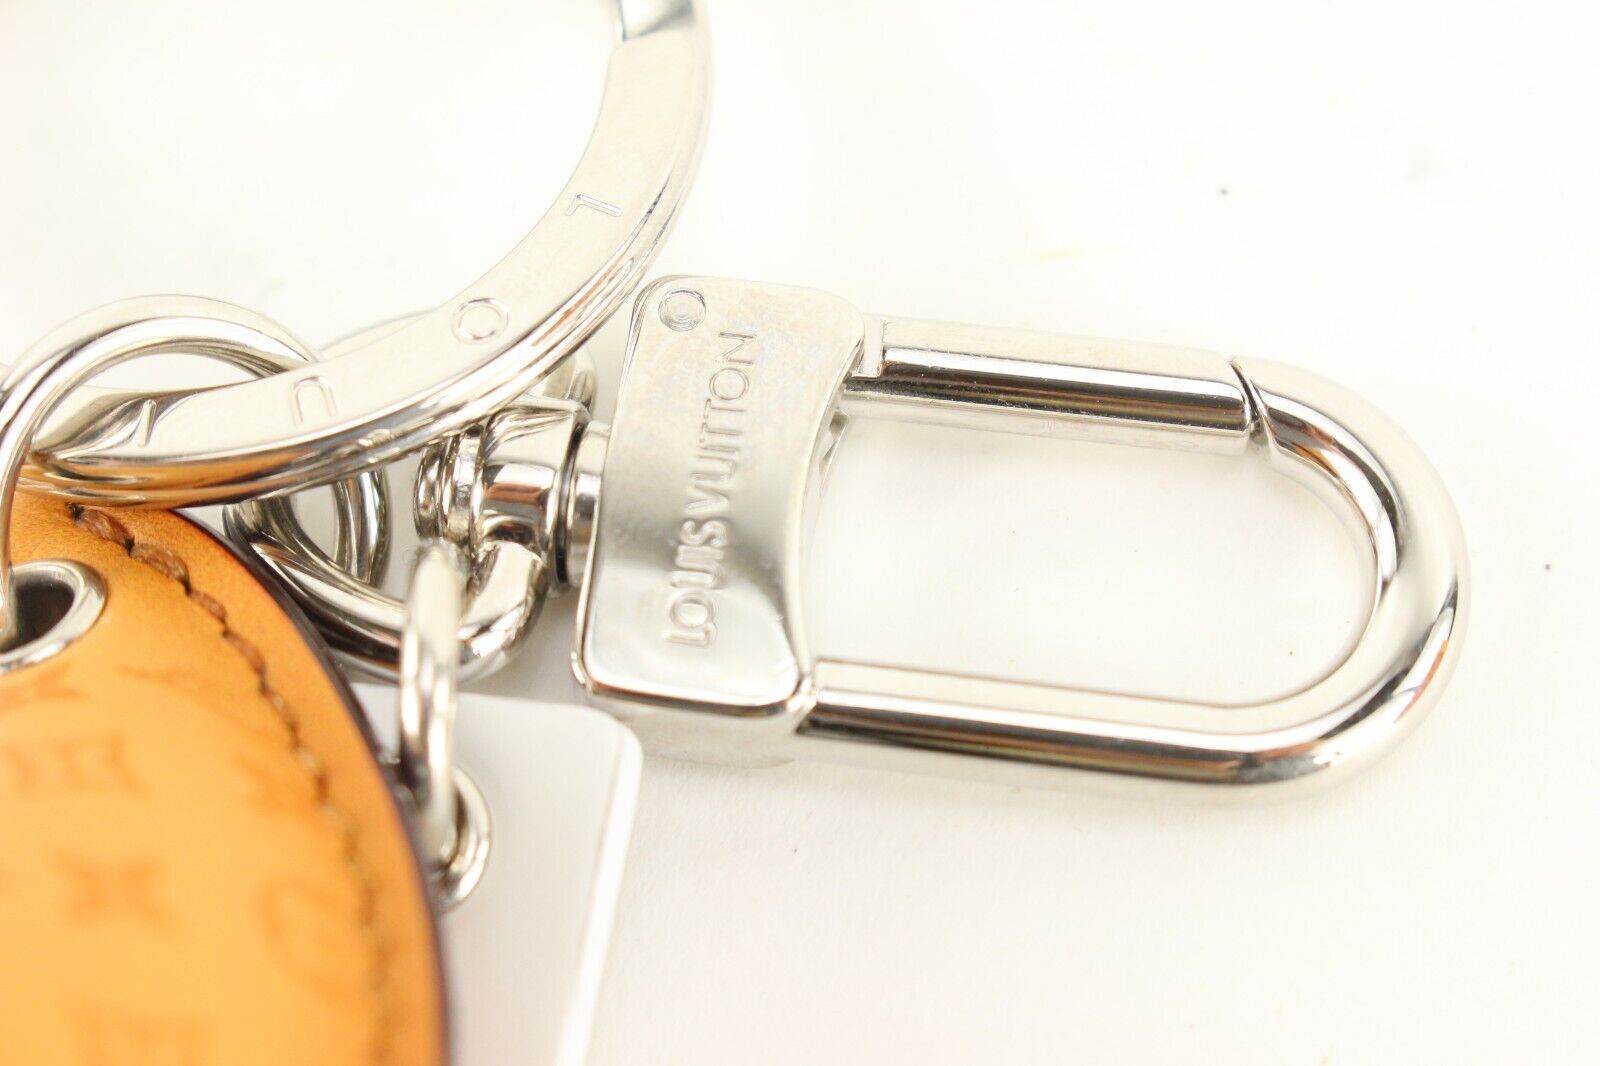 Louis Vuitton 2023 Rare Monogram Fortune Cookie Bag Charm Key Holder 1LK0127